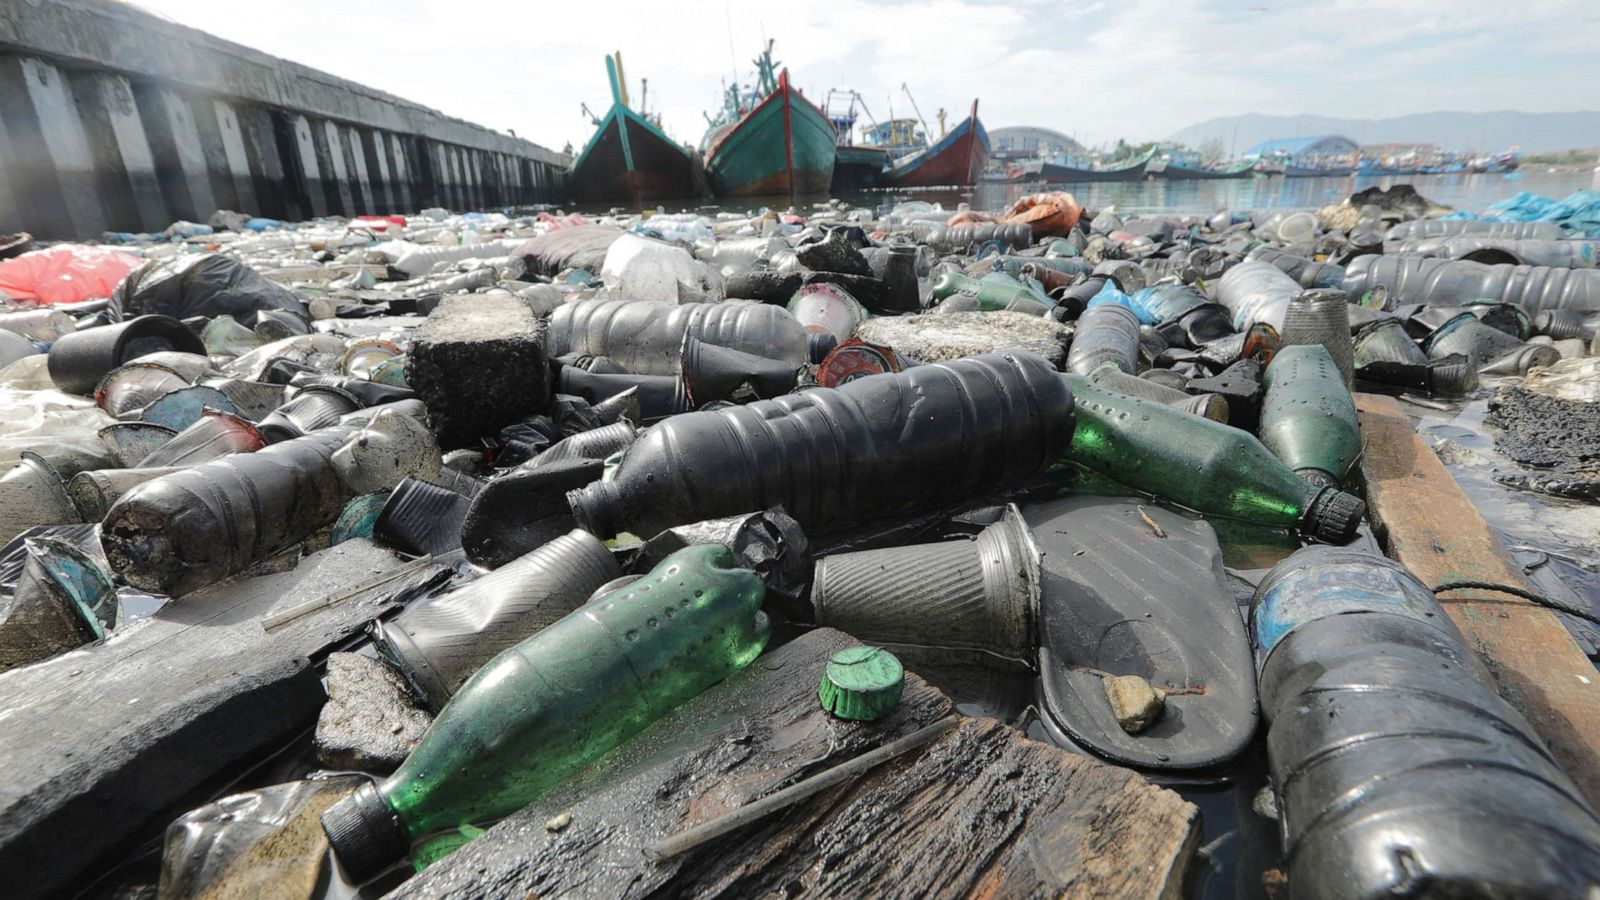 https://s.abcnews.com/images/Business/water-bottle-pollution-ss-jt-190925_hpMain_16x9_1600.jpg